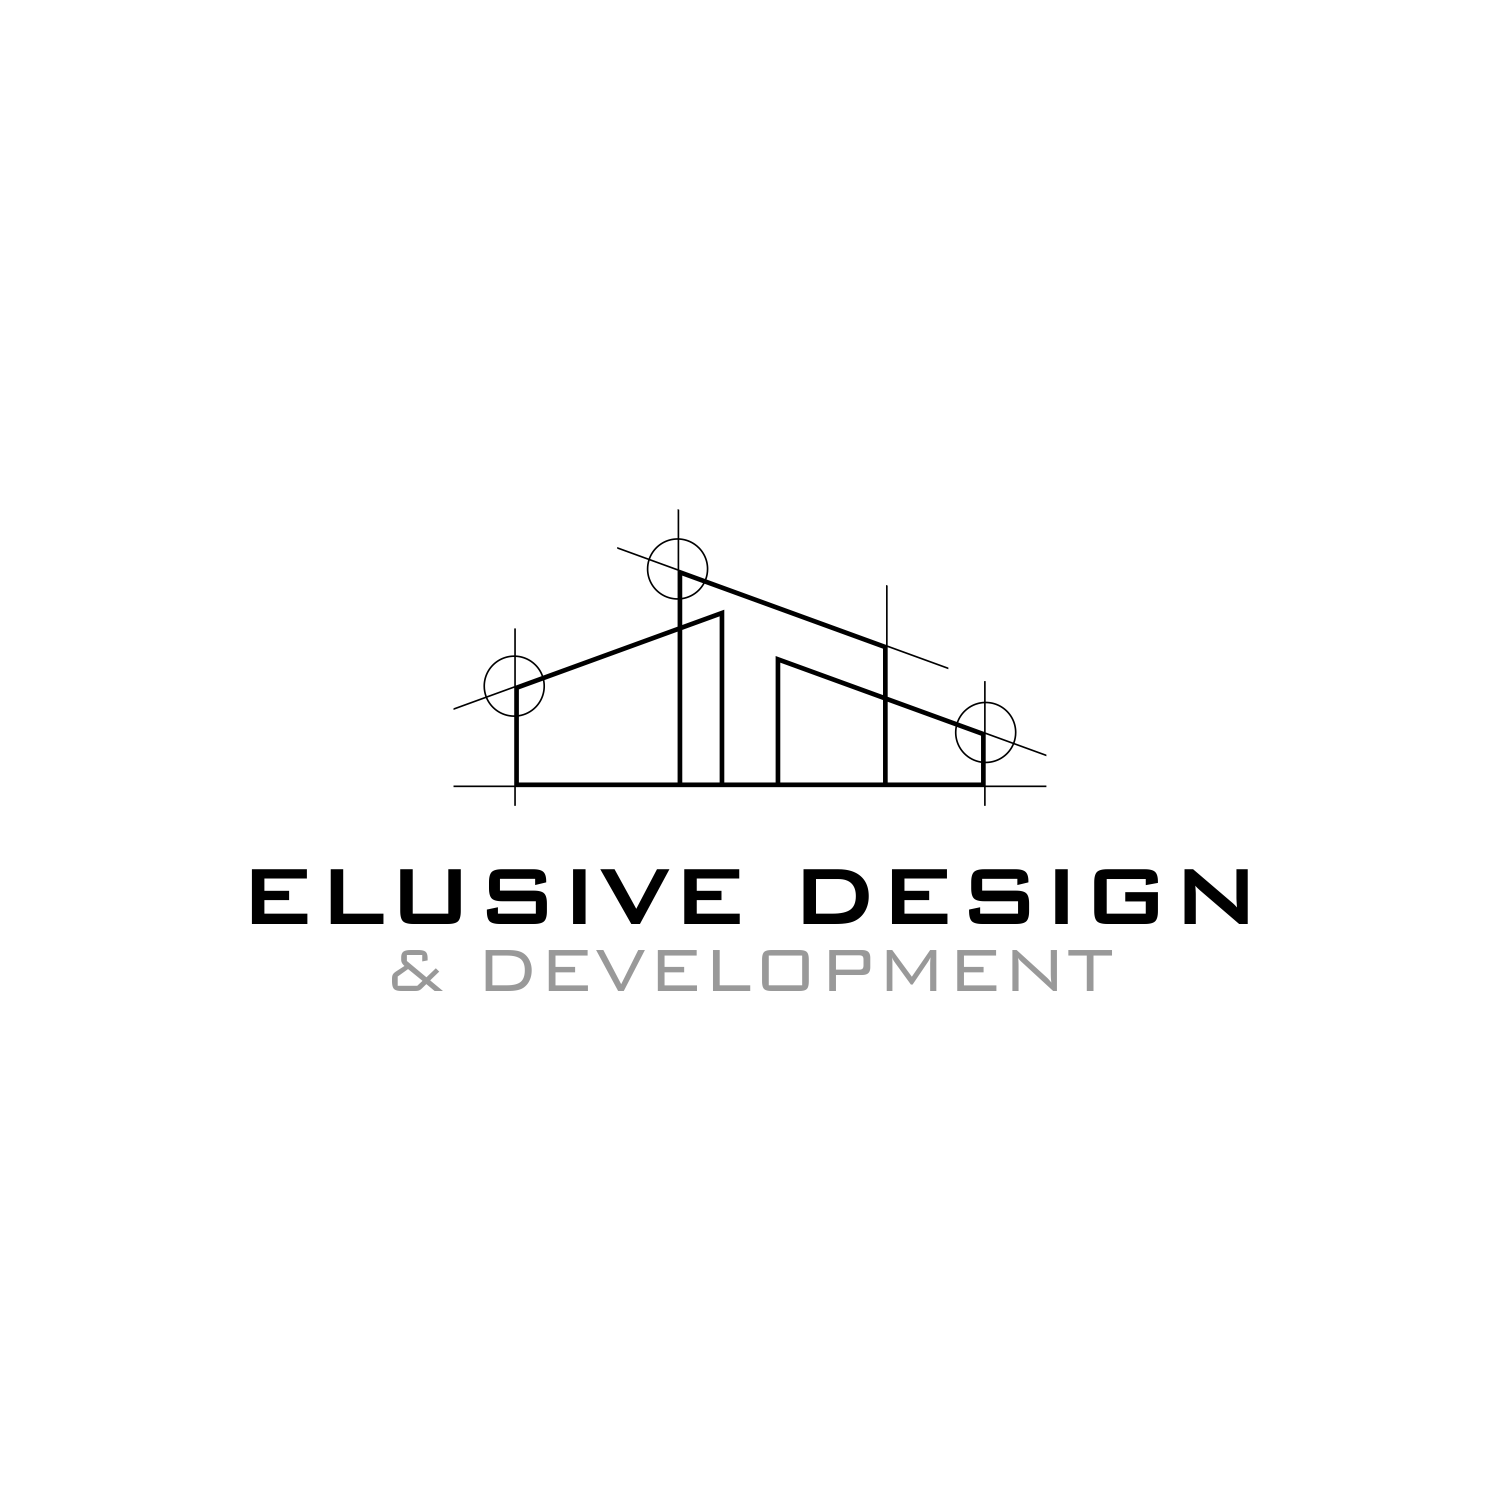 Architecture Logo - Elegant, Playful, Architecture Logo Design for Elusive Design